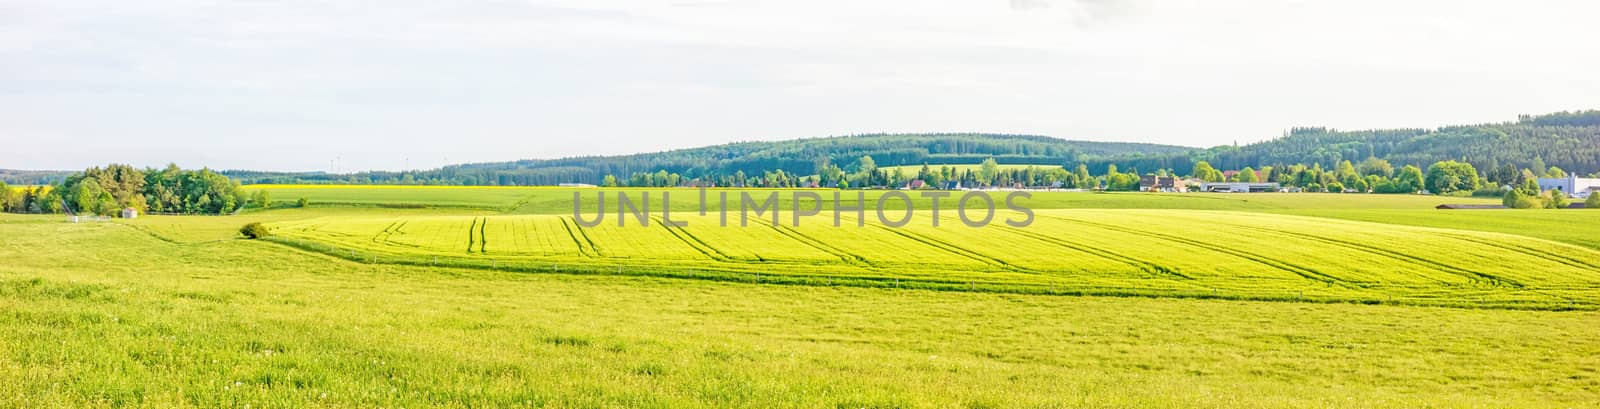 Farmland panorama - wheat field, green meadow, rural landscape